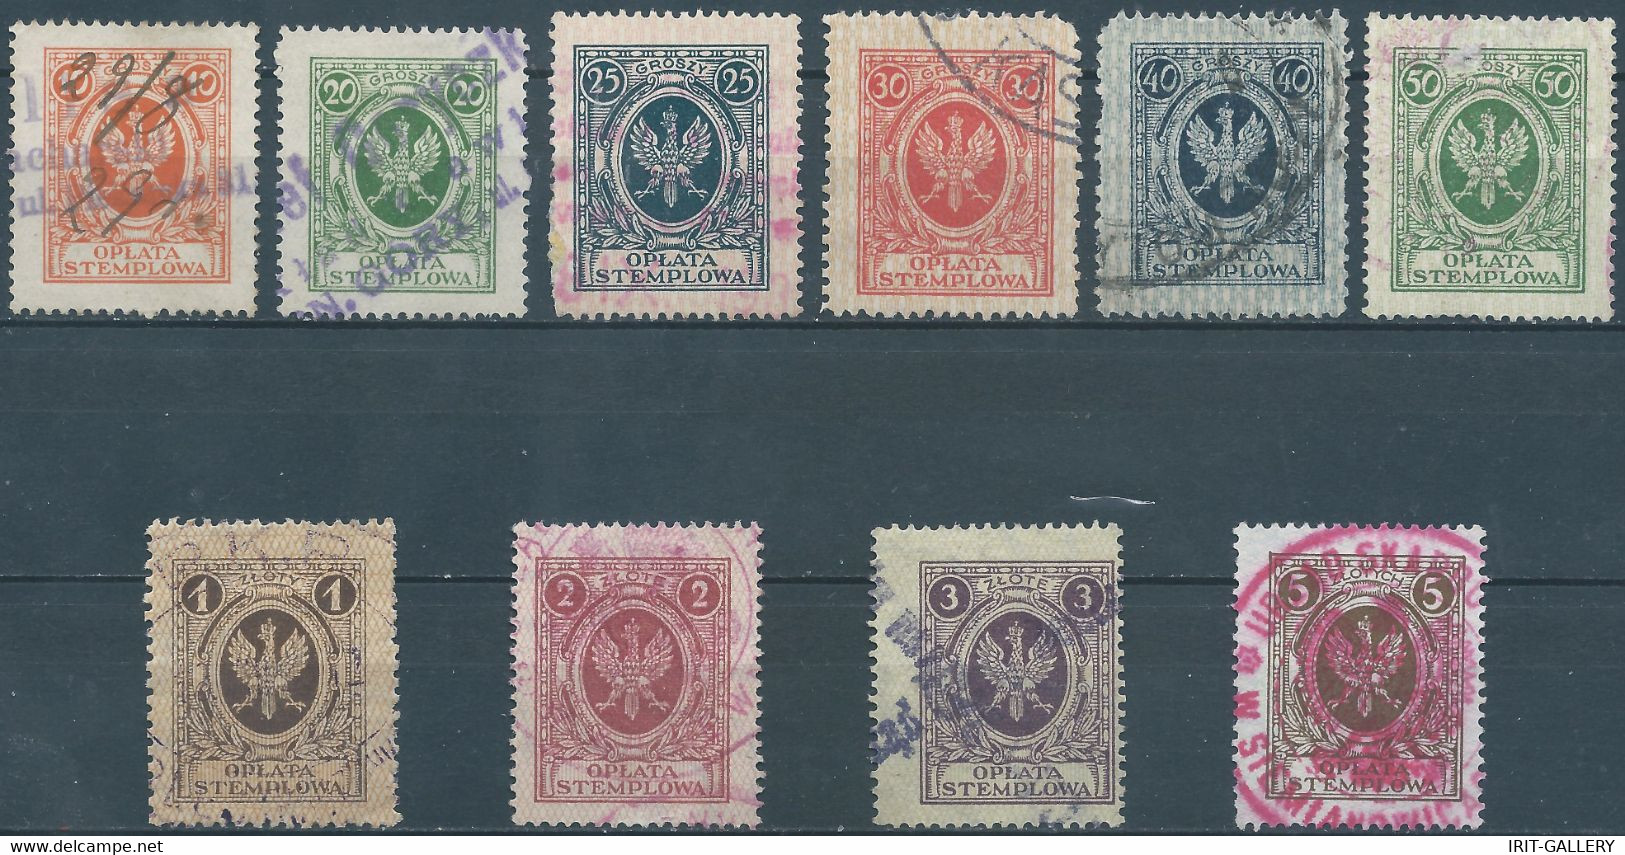 POLONIA-POLAND-POLSKA,Revenue Stamps Fiscal Tax 1925-1929 (OPLATA STEMPLOWA)Used - Fiscale Zegels